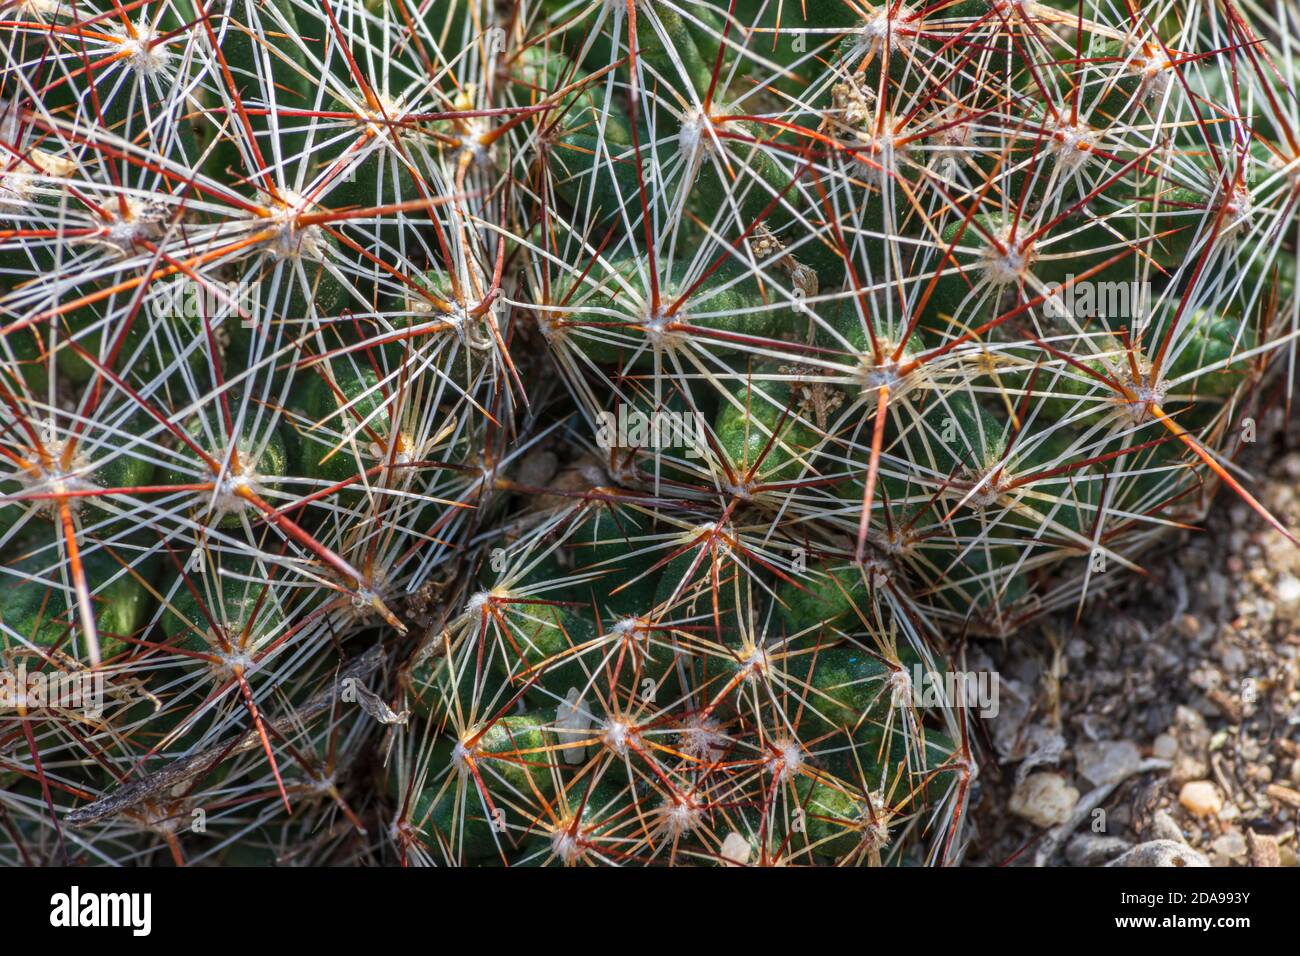 Close up detail of Beehive cactus or Spiny Star cactus (Escobaria vivipara), Castle Rock area of Colorado USA. Photo taken in October. Stock Photo